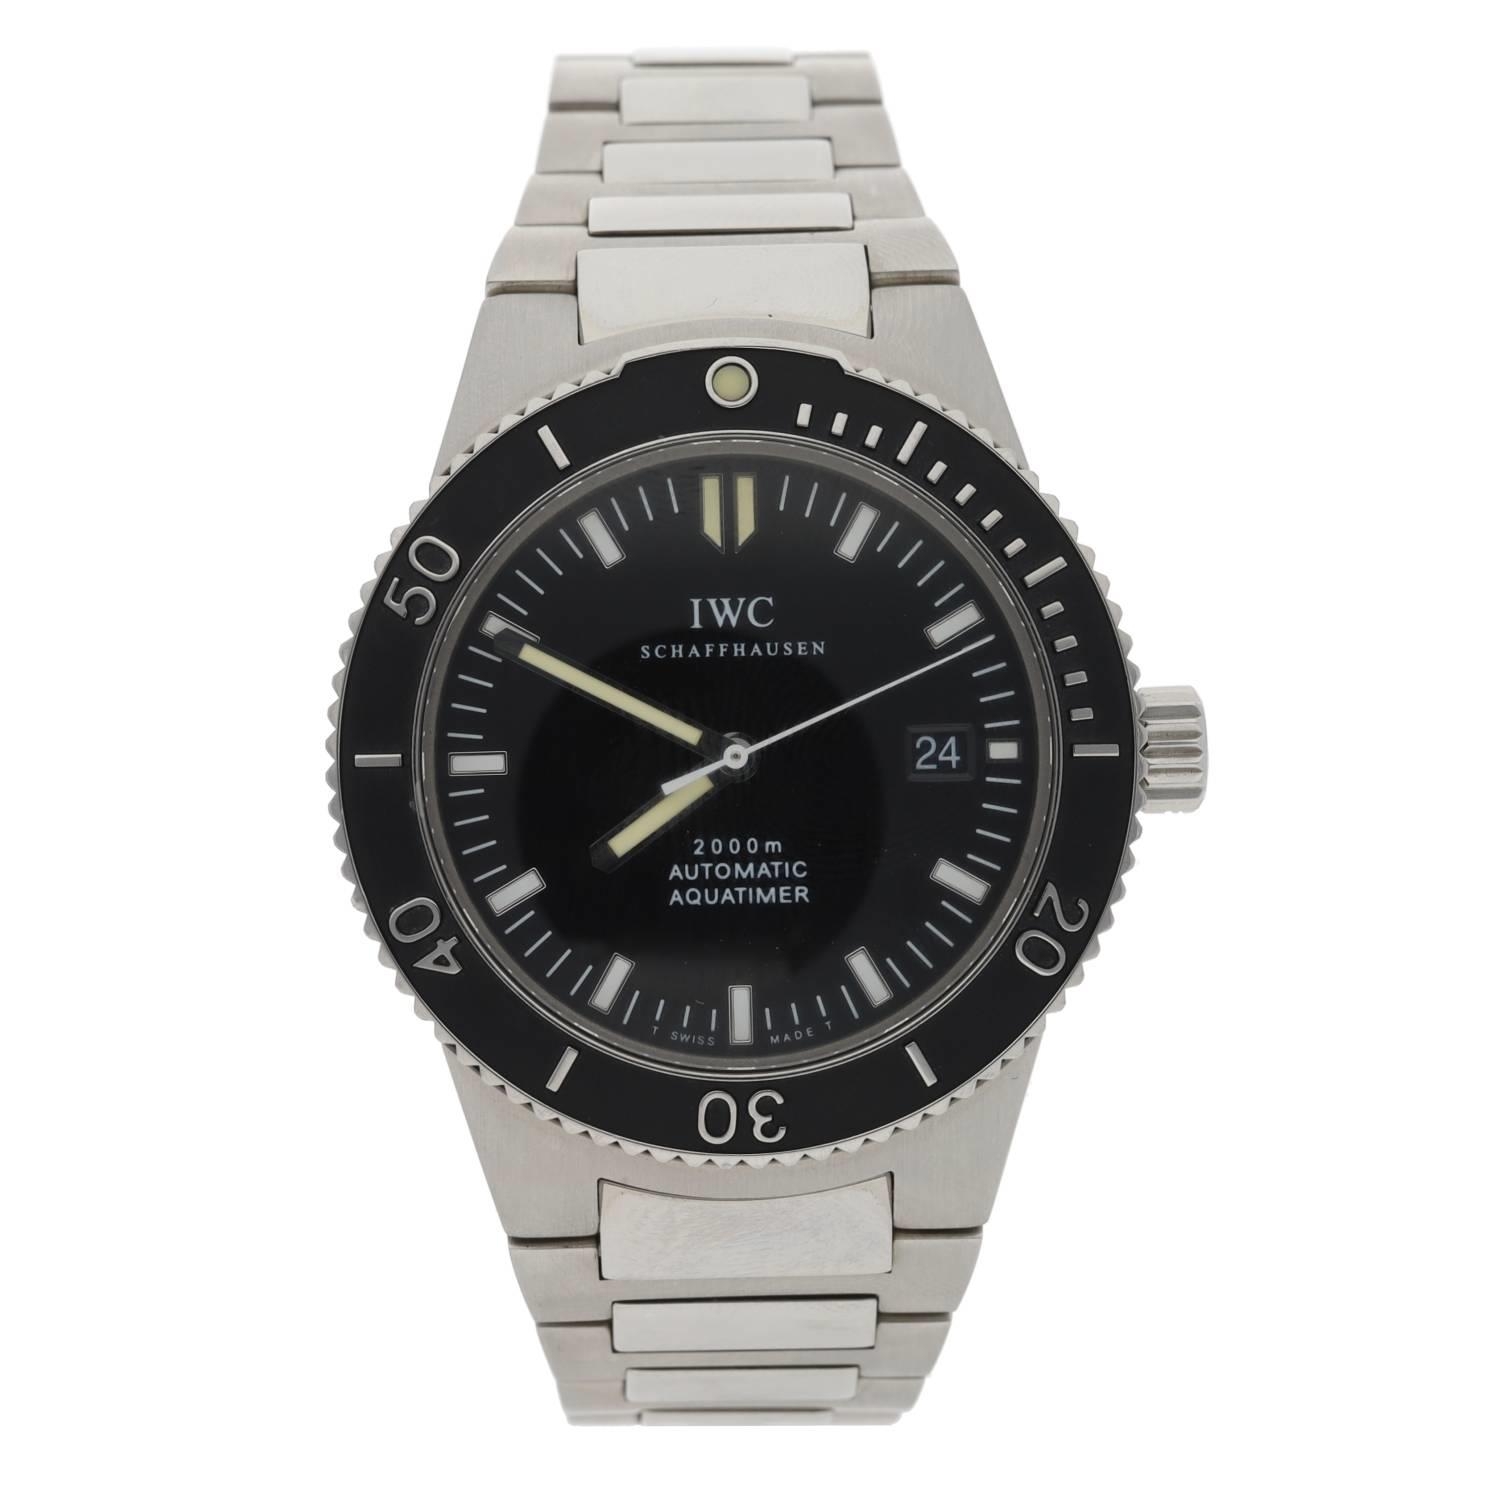 IWC (International Watch Company) Aquatimer GST 2000M automatic stainless steel gentleman's - Image 2 of 4